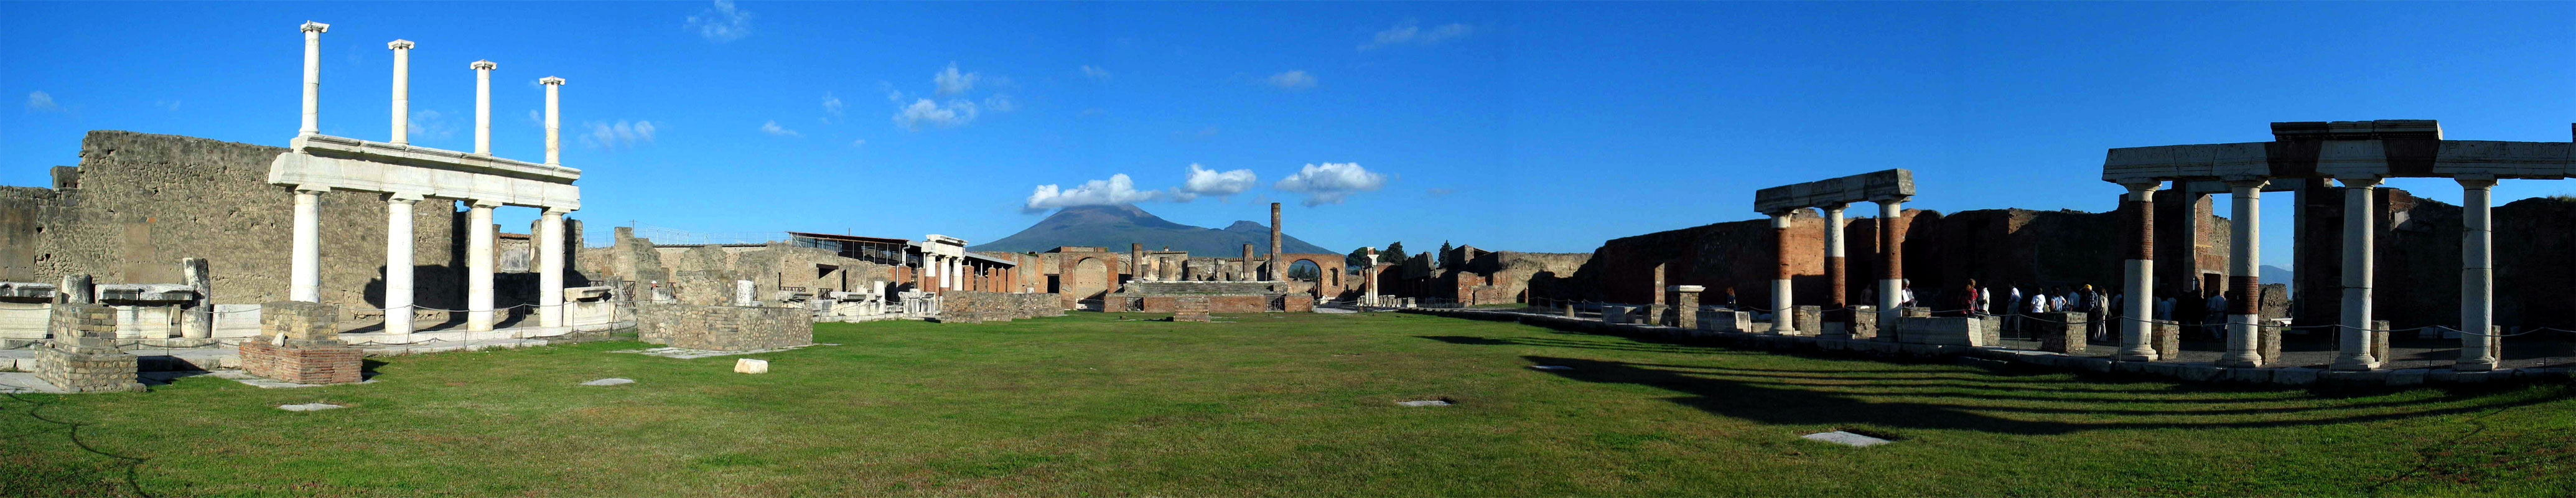 7 panorama Ancient city of Pompeii